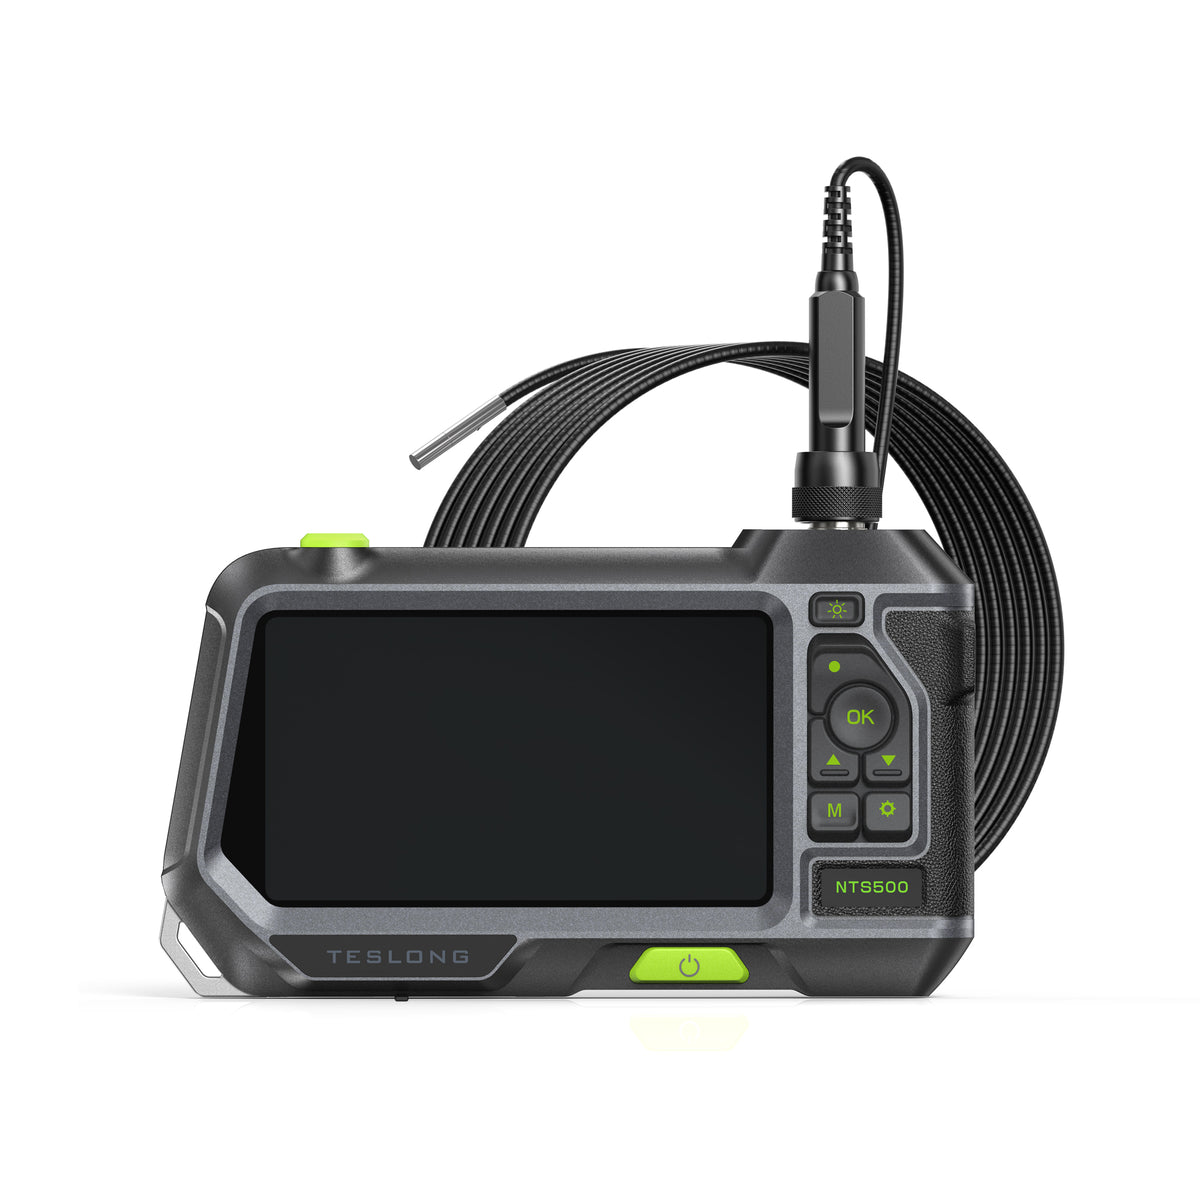 Digital Video Otoscope, 6 Inch Endoscope, Endoscope Camera